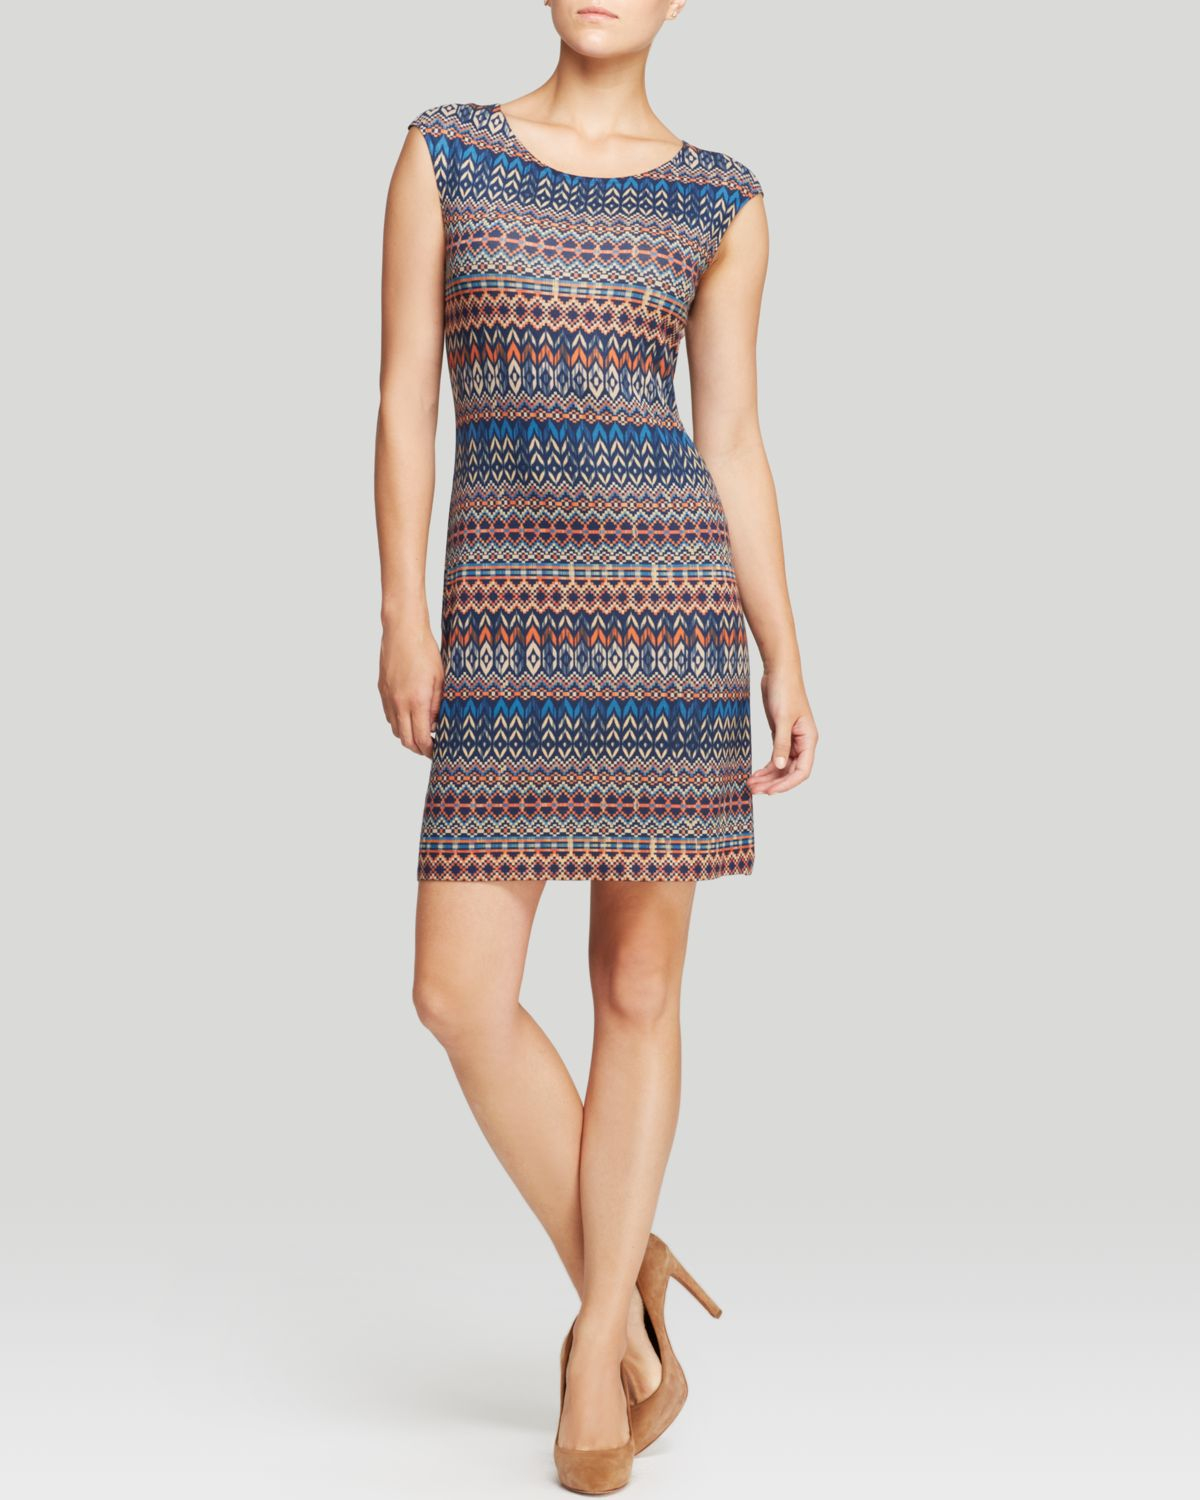 Lyst - Nally & Millie Tribal Print Dress